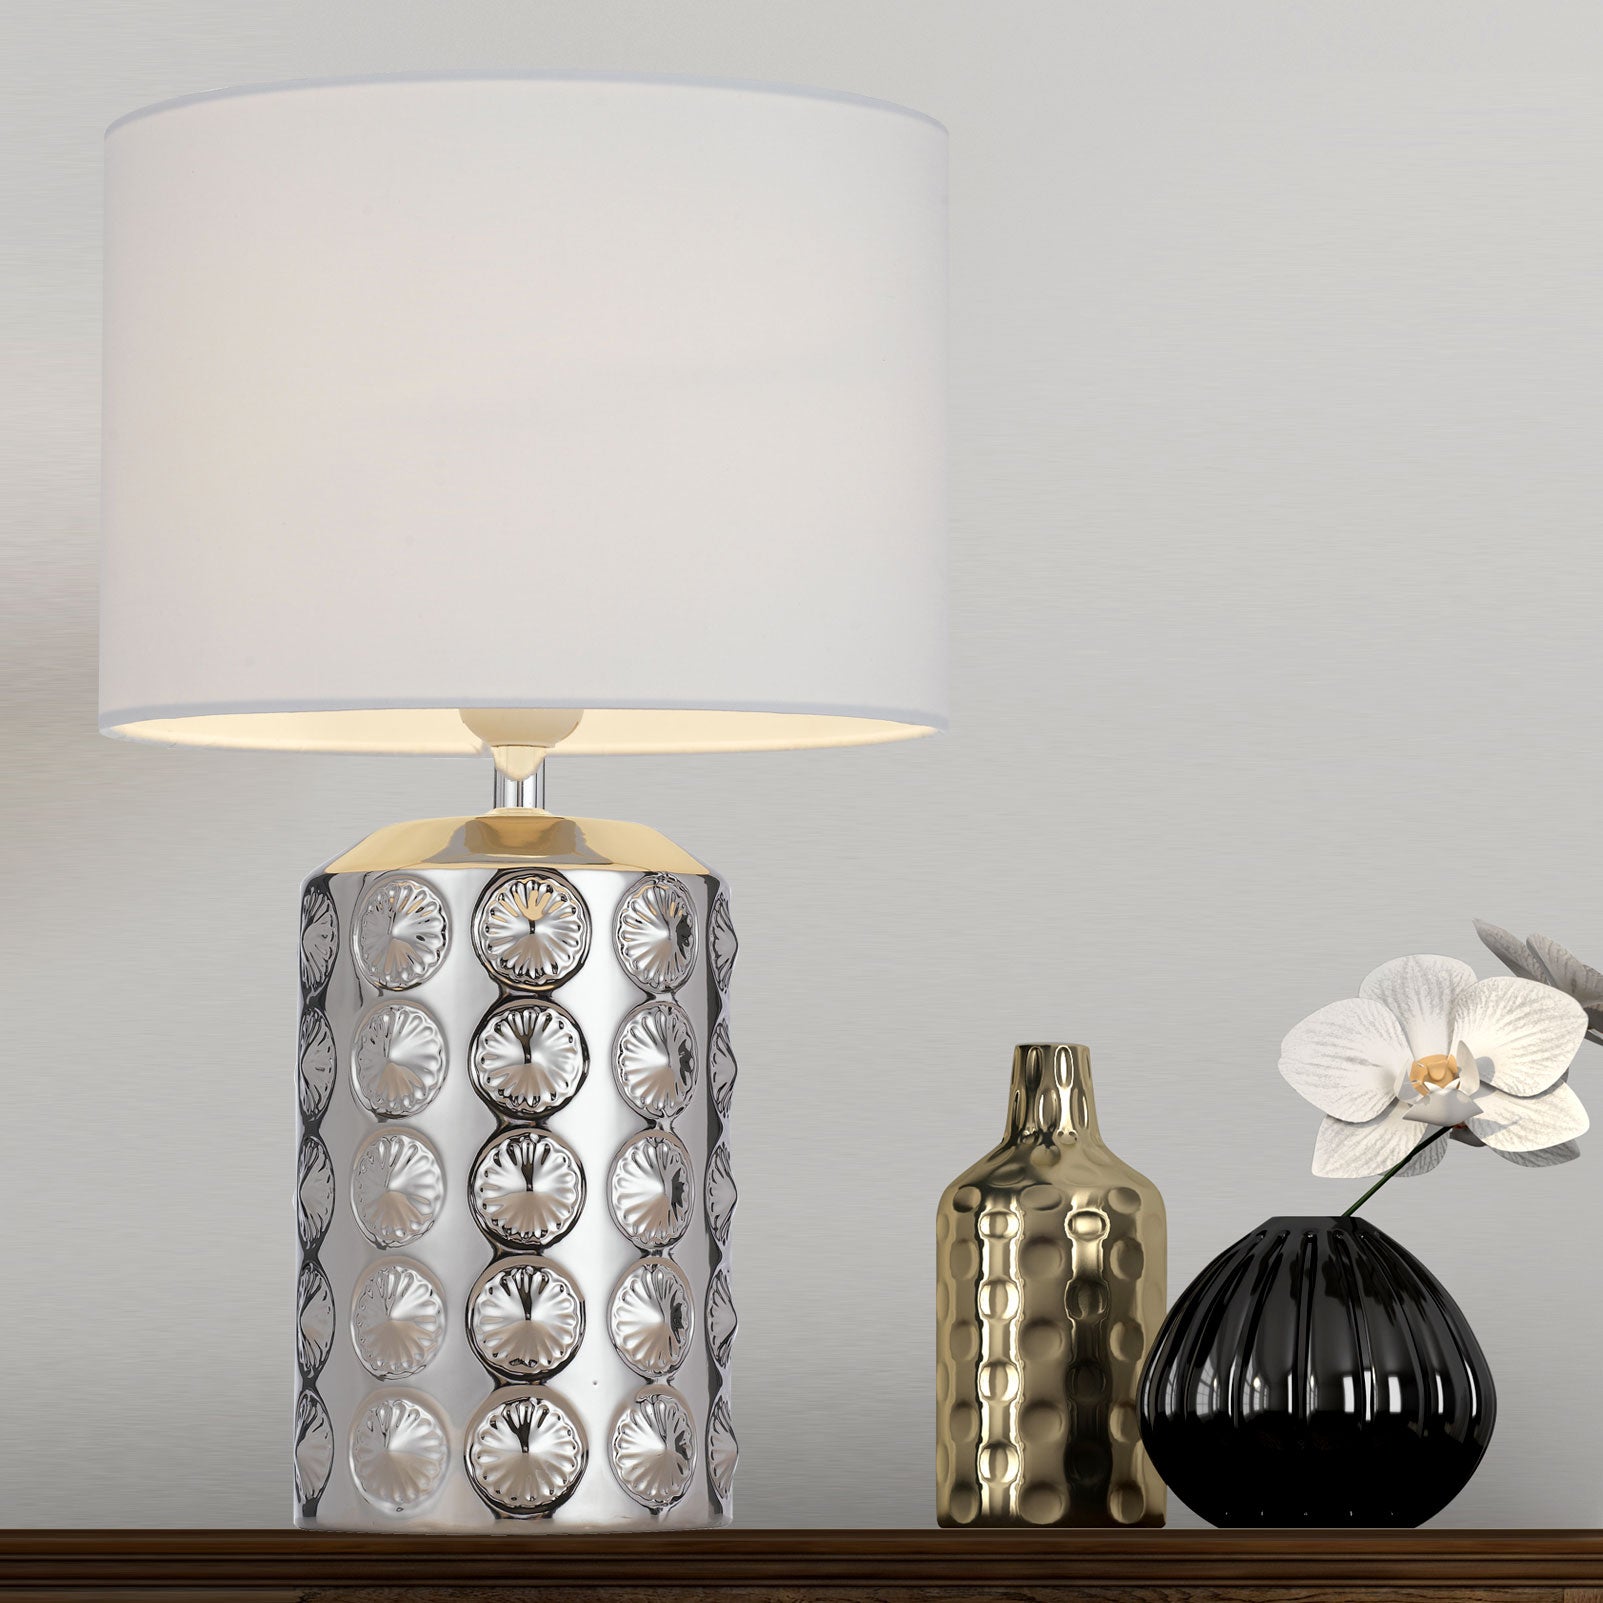 Buy Table Lamps Australia NANCY Table Lamp Silver / White Ceramic / Fabric - NANCY TL-SLWH